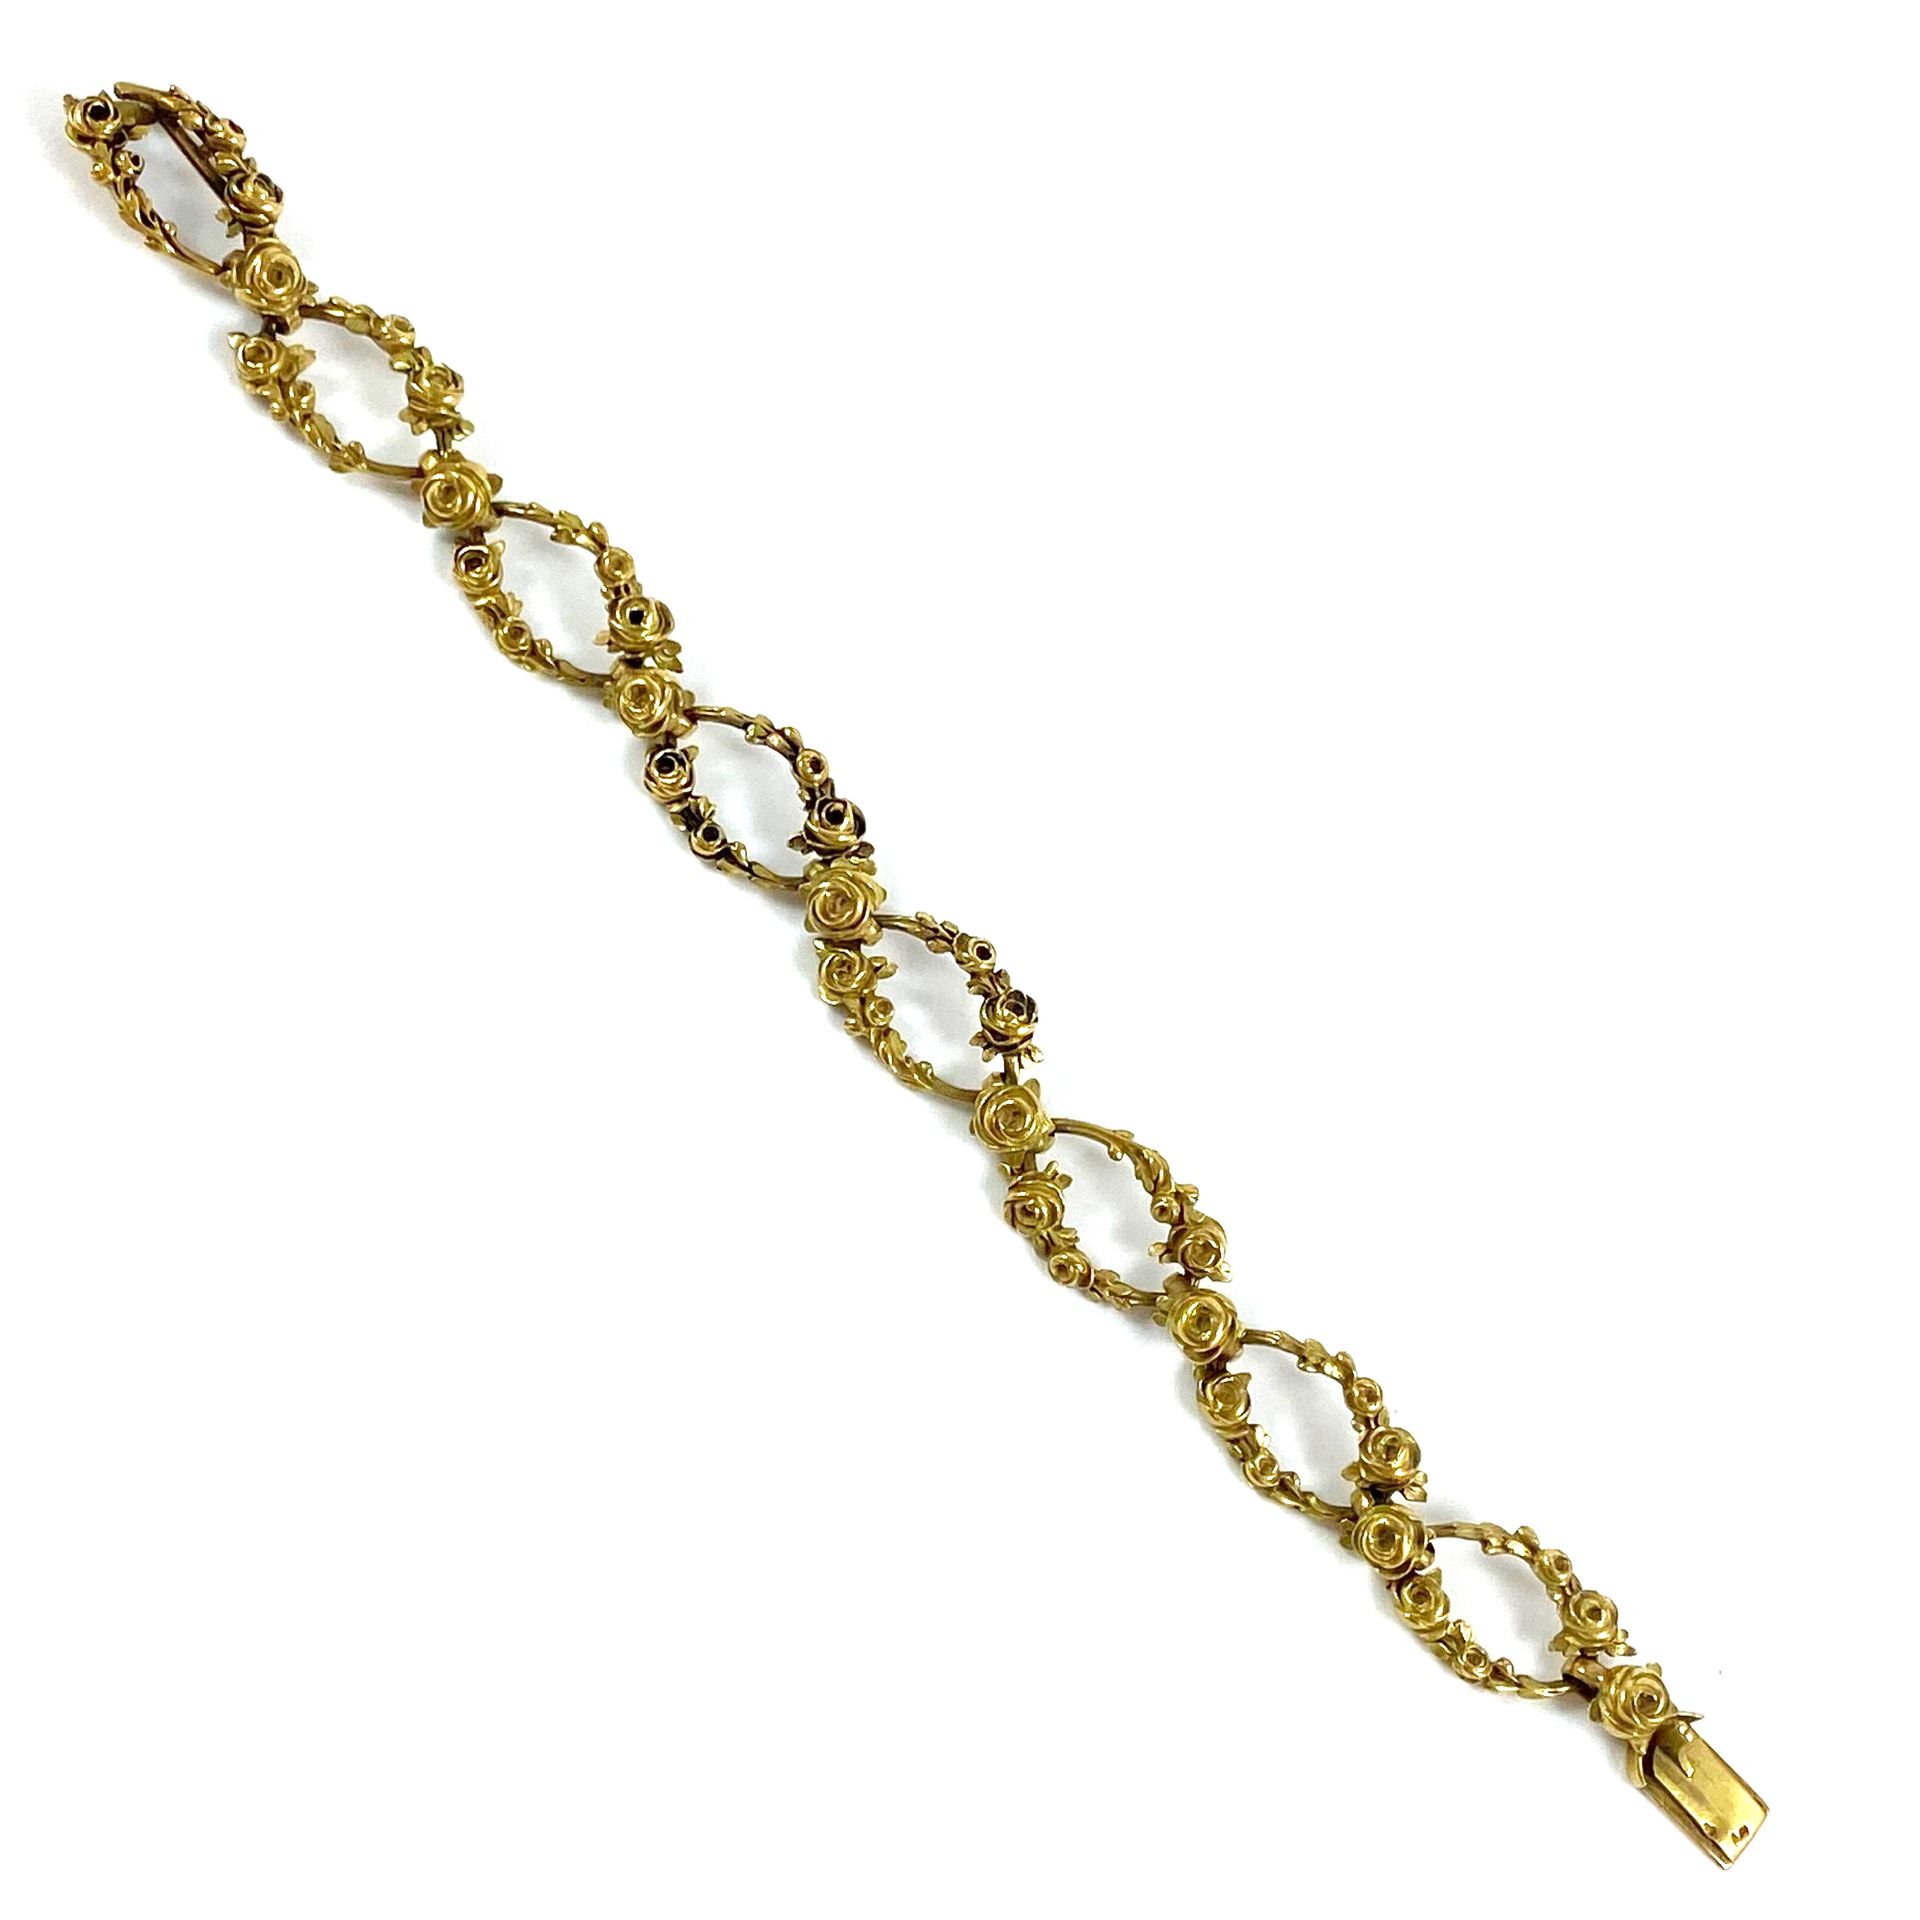 Null 18世纪的手镯，有一连串的椭圆形链接，上面有一个玫瑰花的图案。镶嵌在18K黄金中。法国的工作。 长度：19厘米。 毛重：38.14克。 一个黄金手镯。